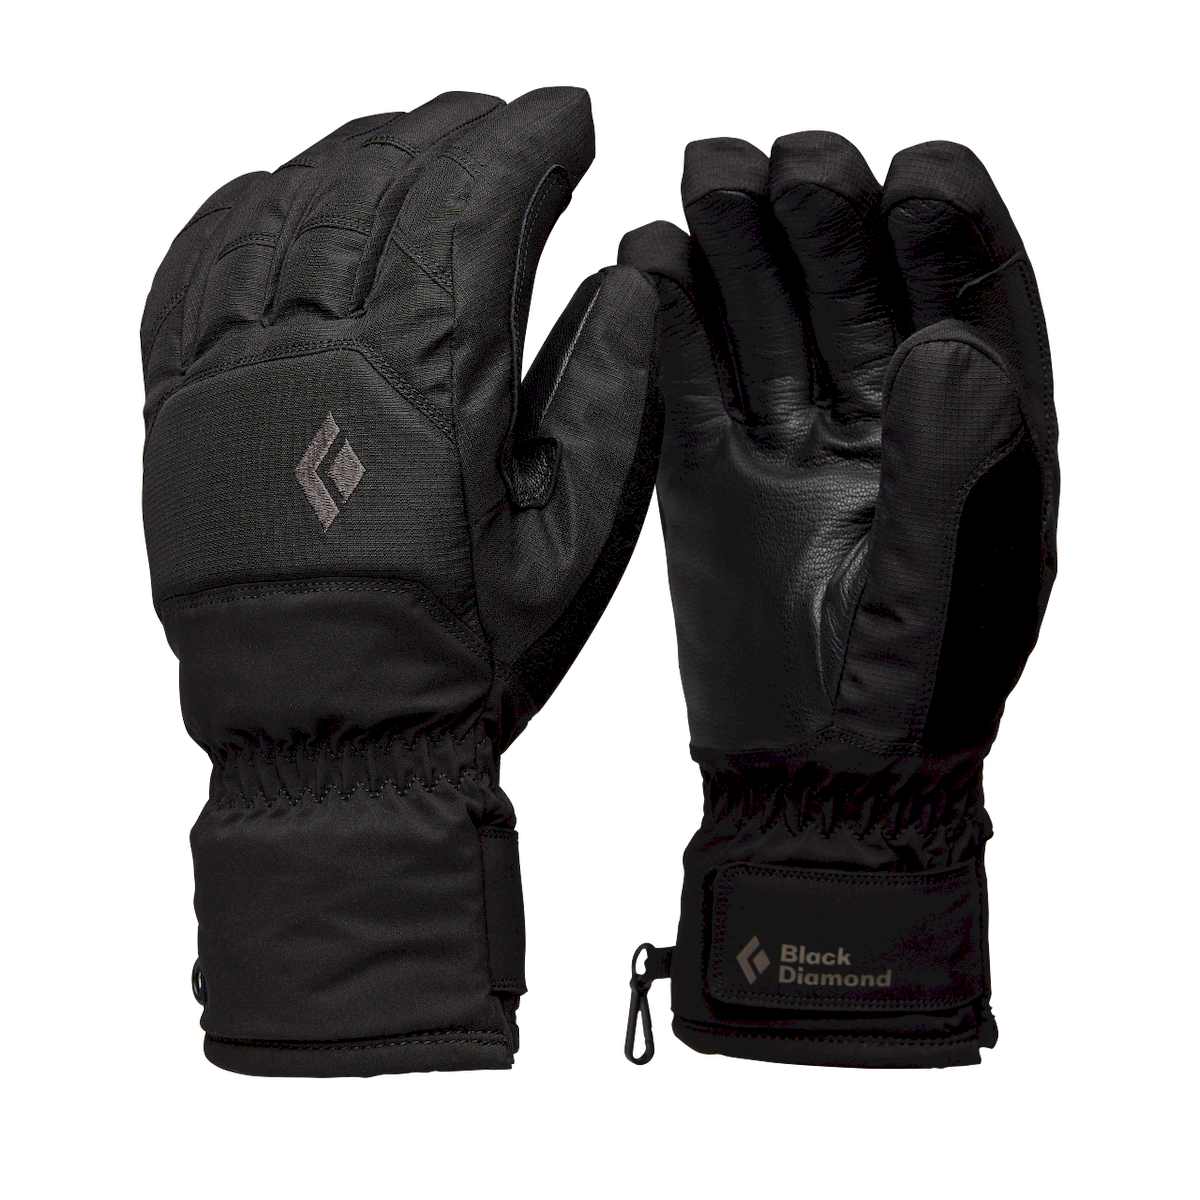 Black Diamond Mission MX Gloves - Ski gloves